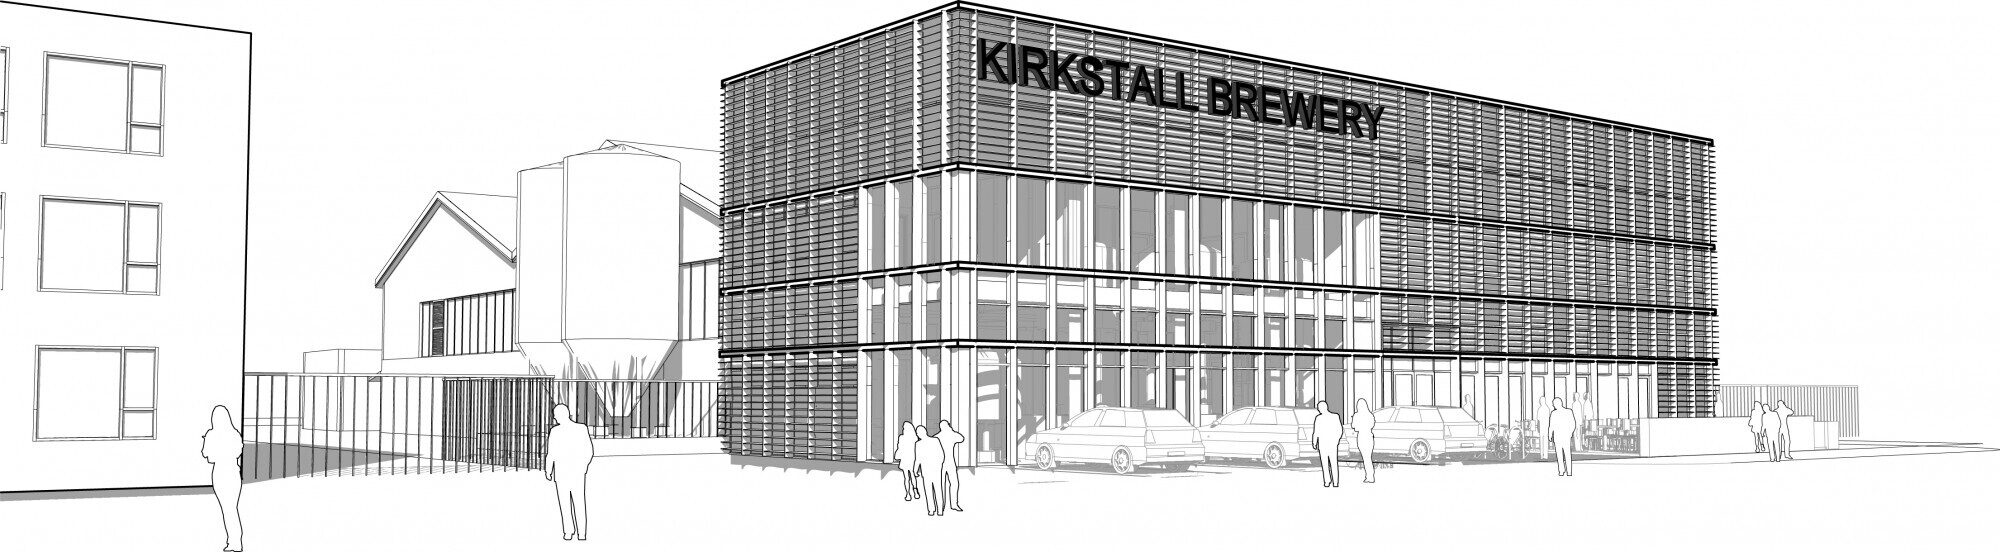 GG Kirkstall Brewery View02